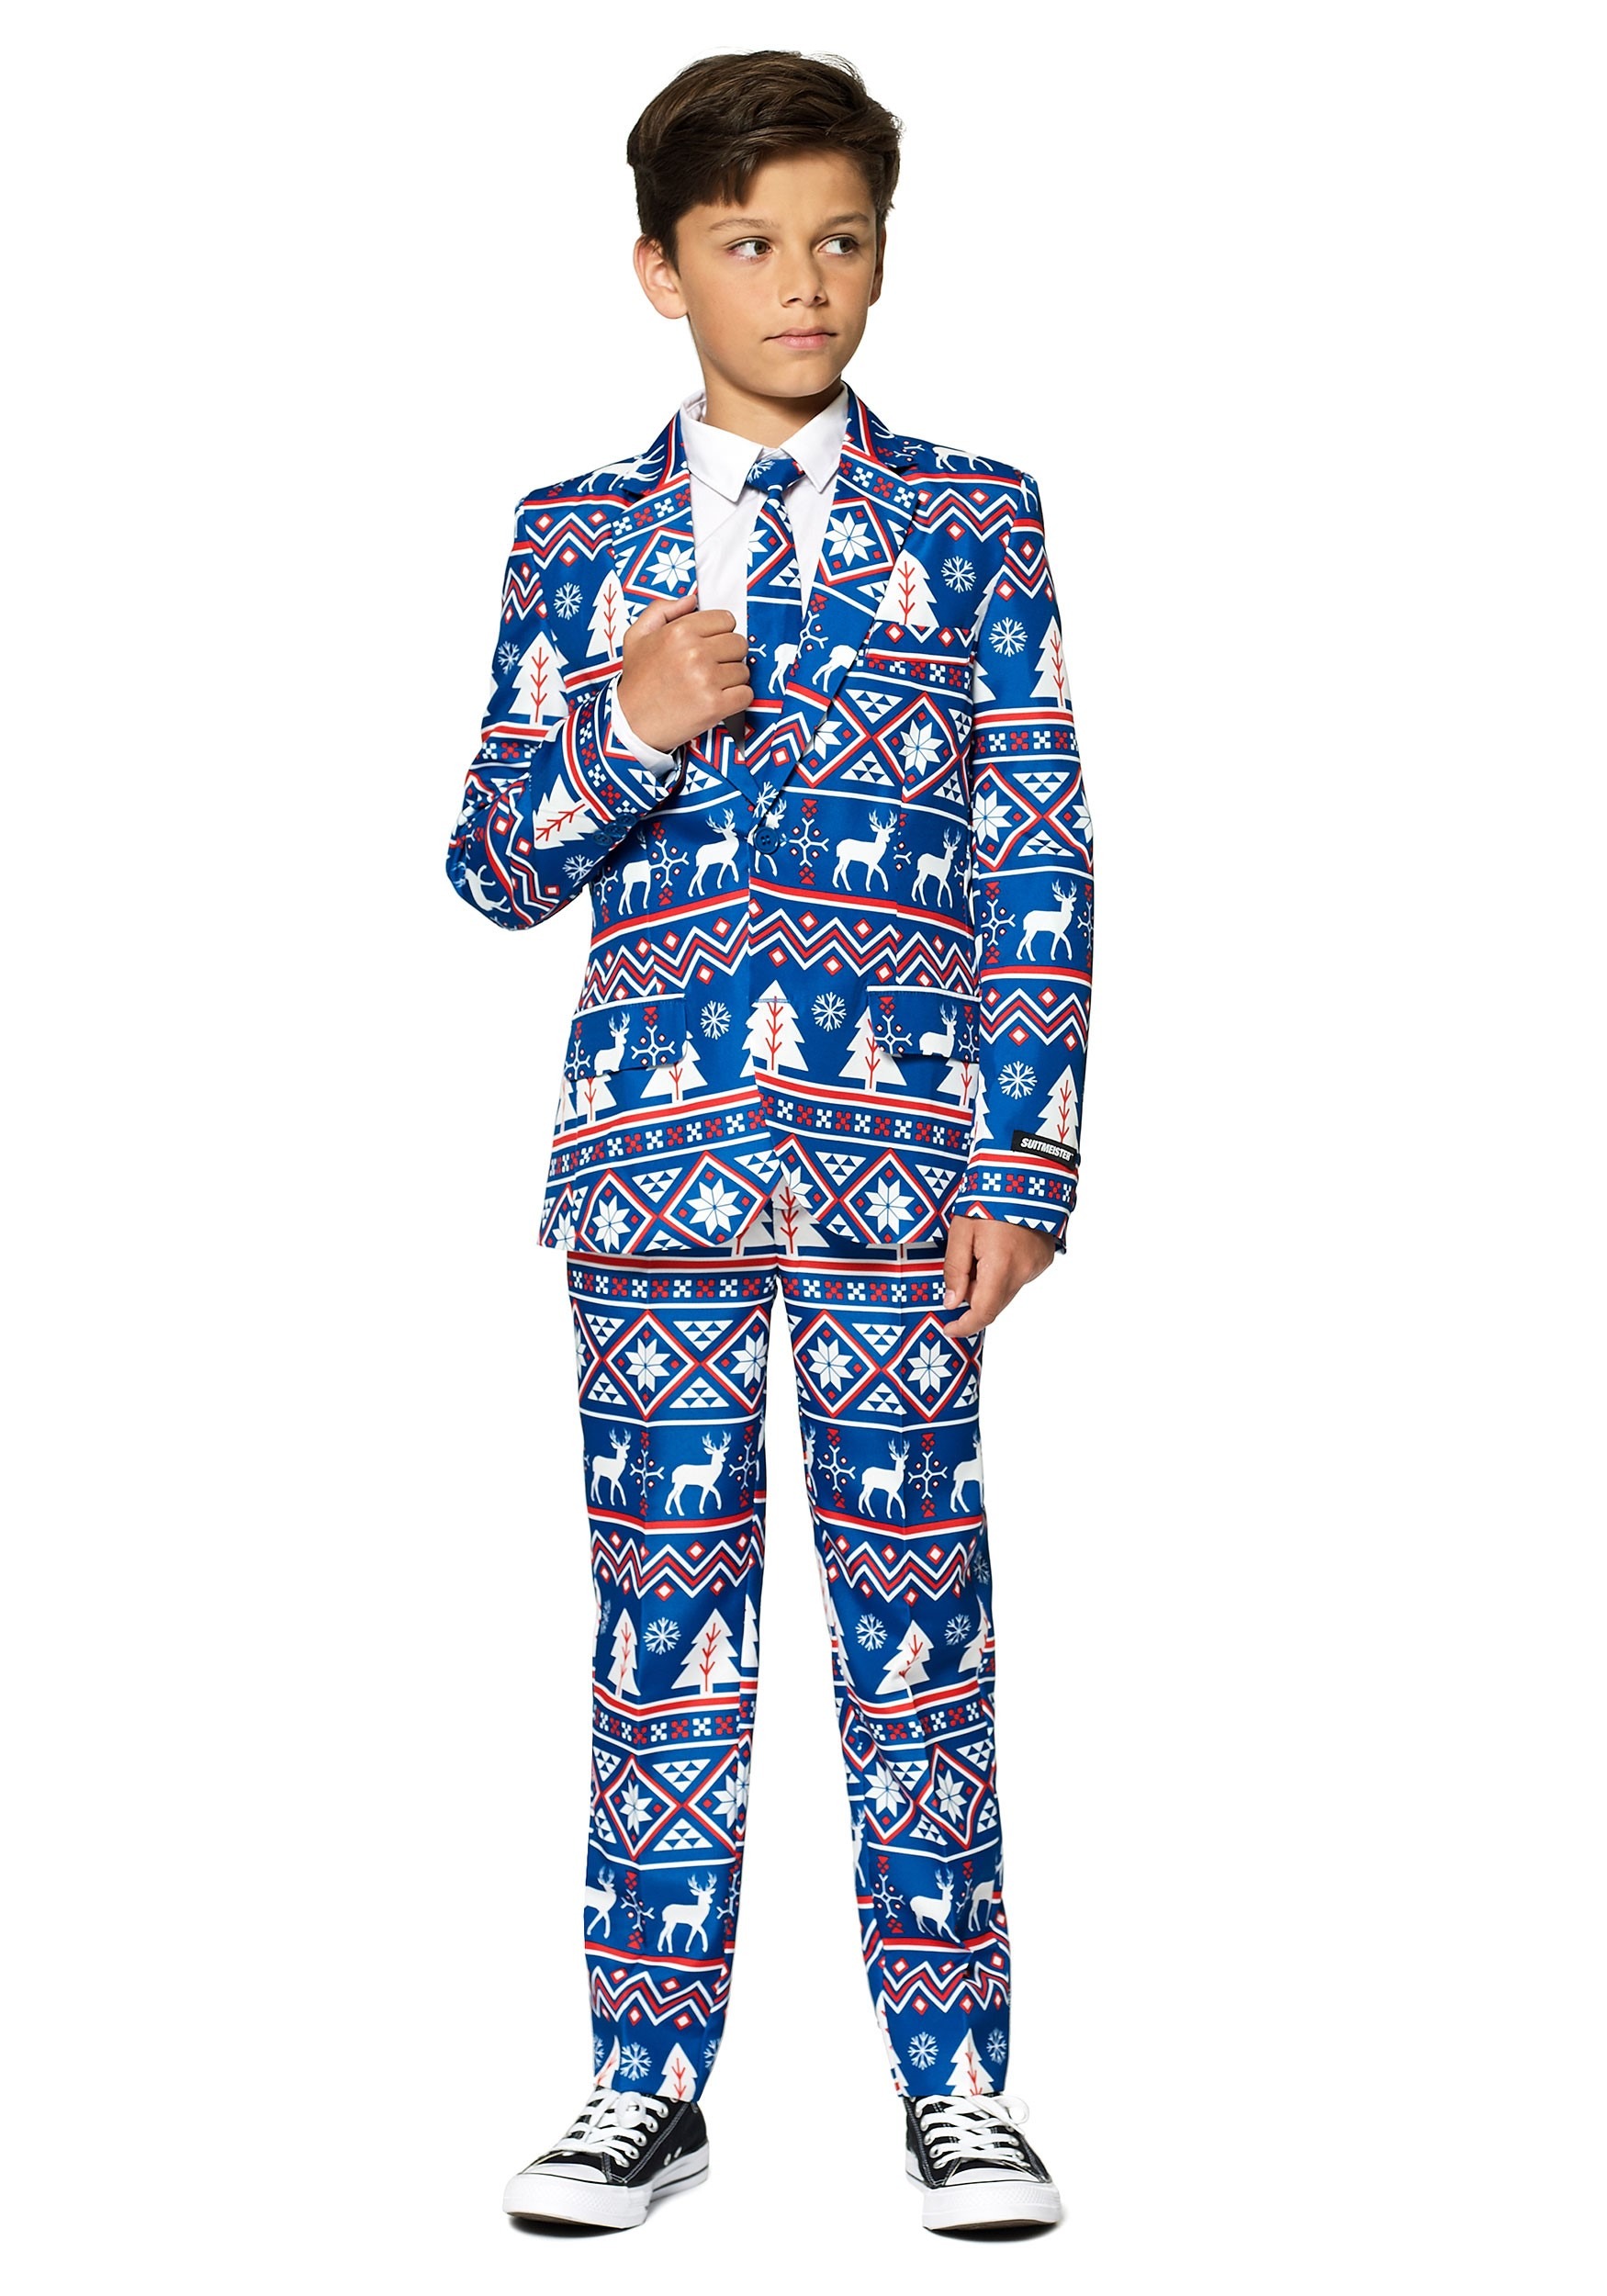 Boys Suitmeister Christmas Blue Nordic Suit